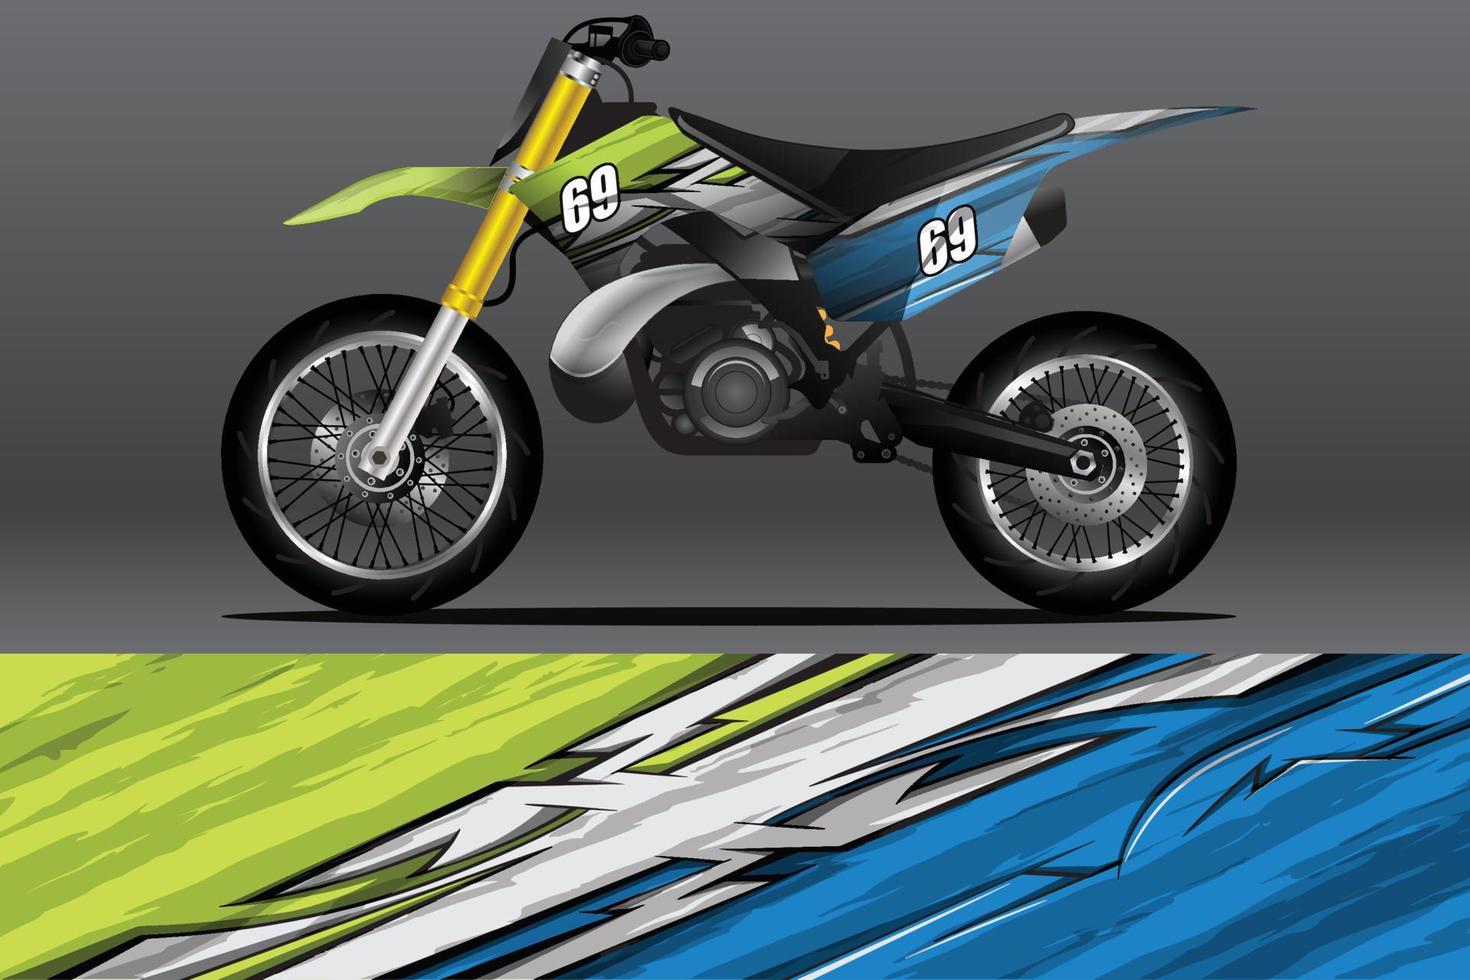 abstrakter Motorrad-Wrap-Aufkleber und Vinyl-Sticker-Design vektor